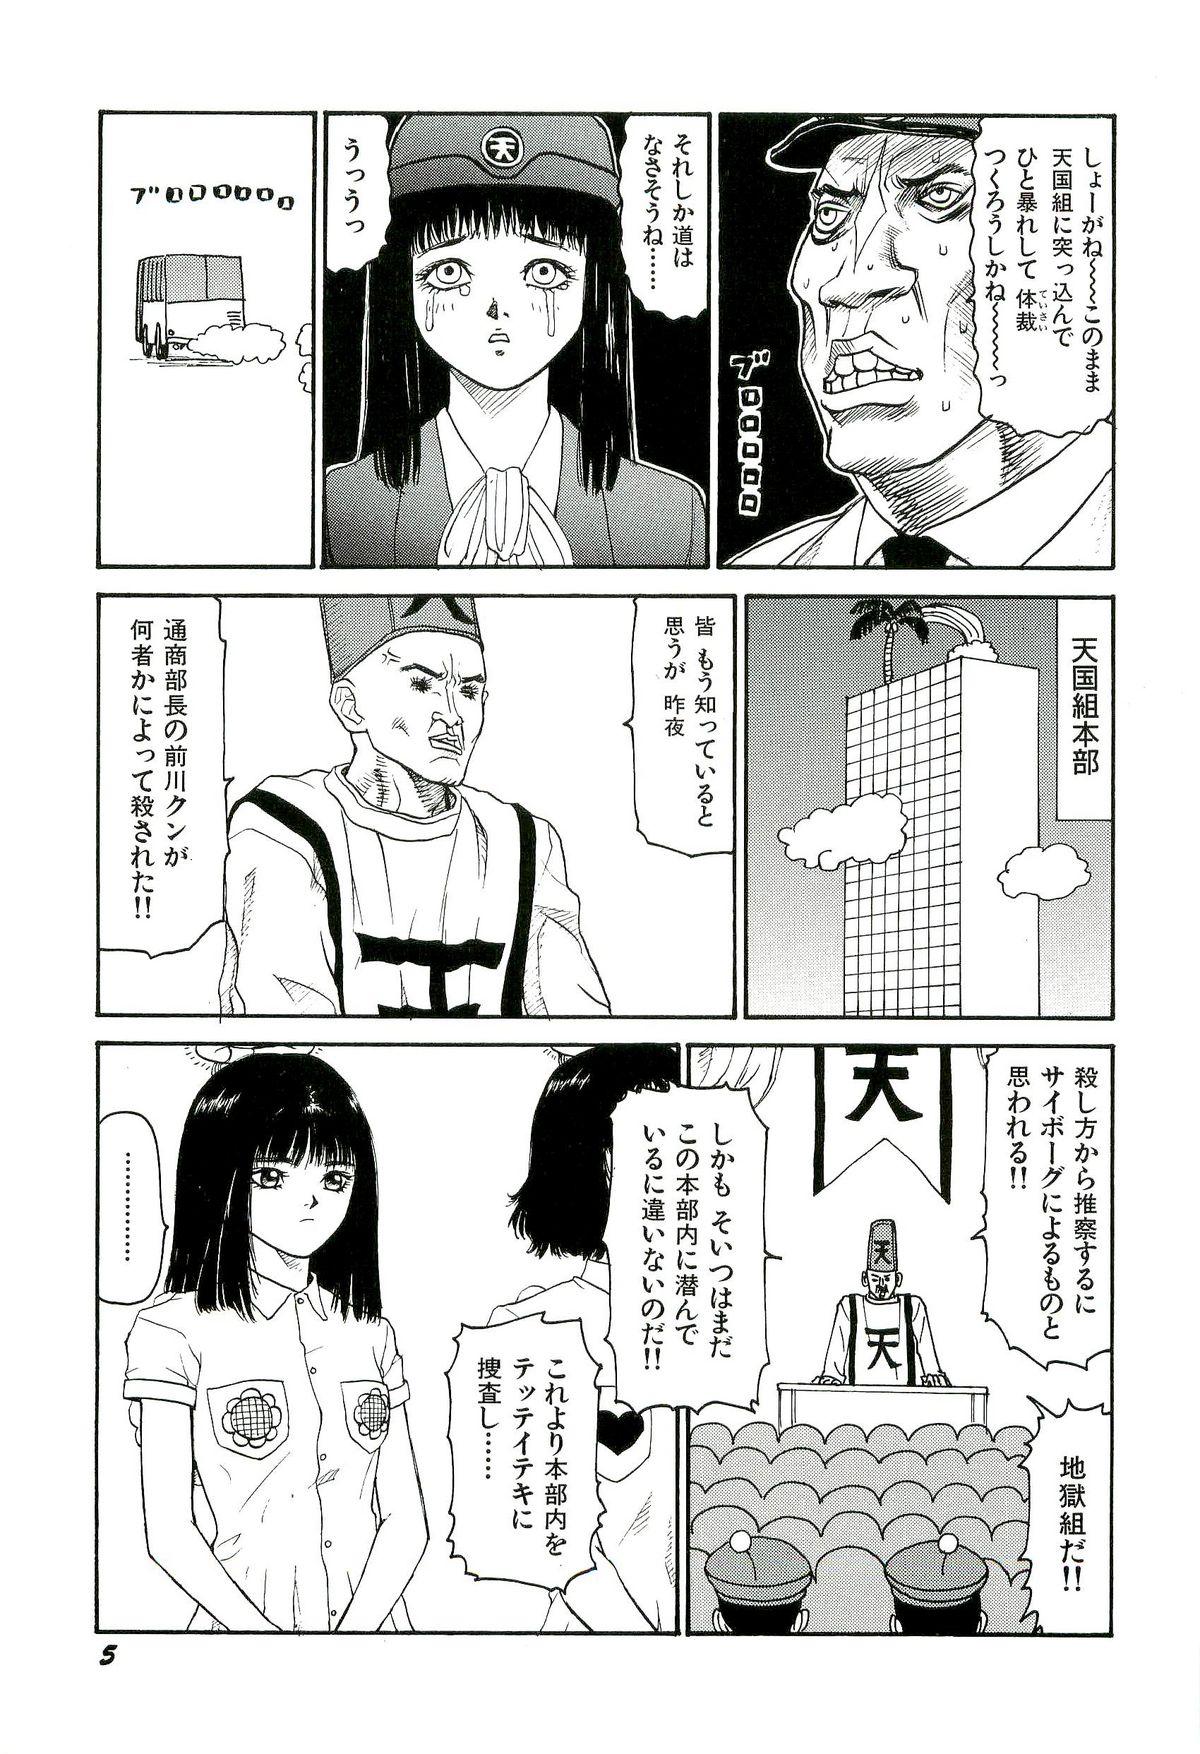 Roundass Jigokugumi no Onna 3 18yearsold - Page 6